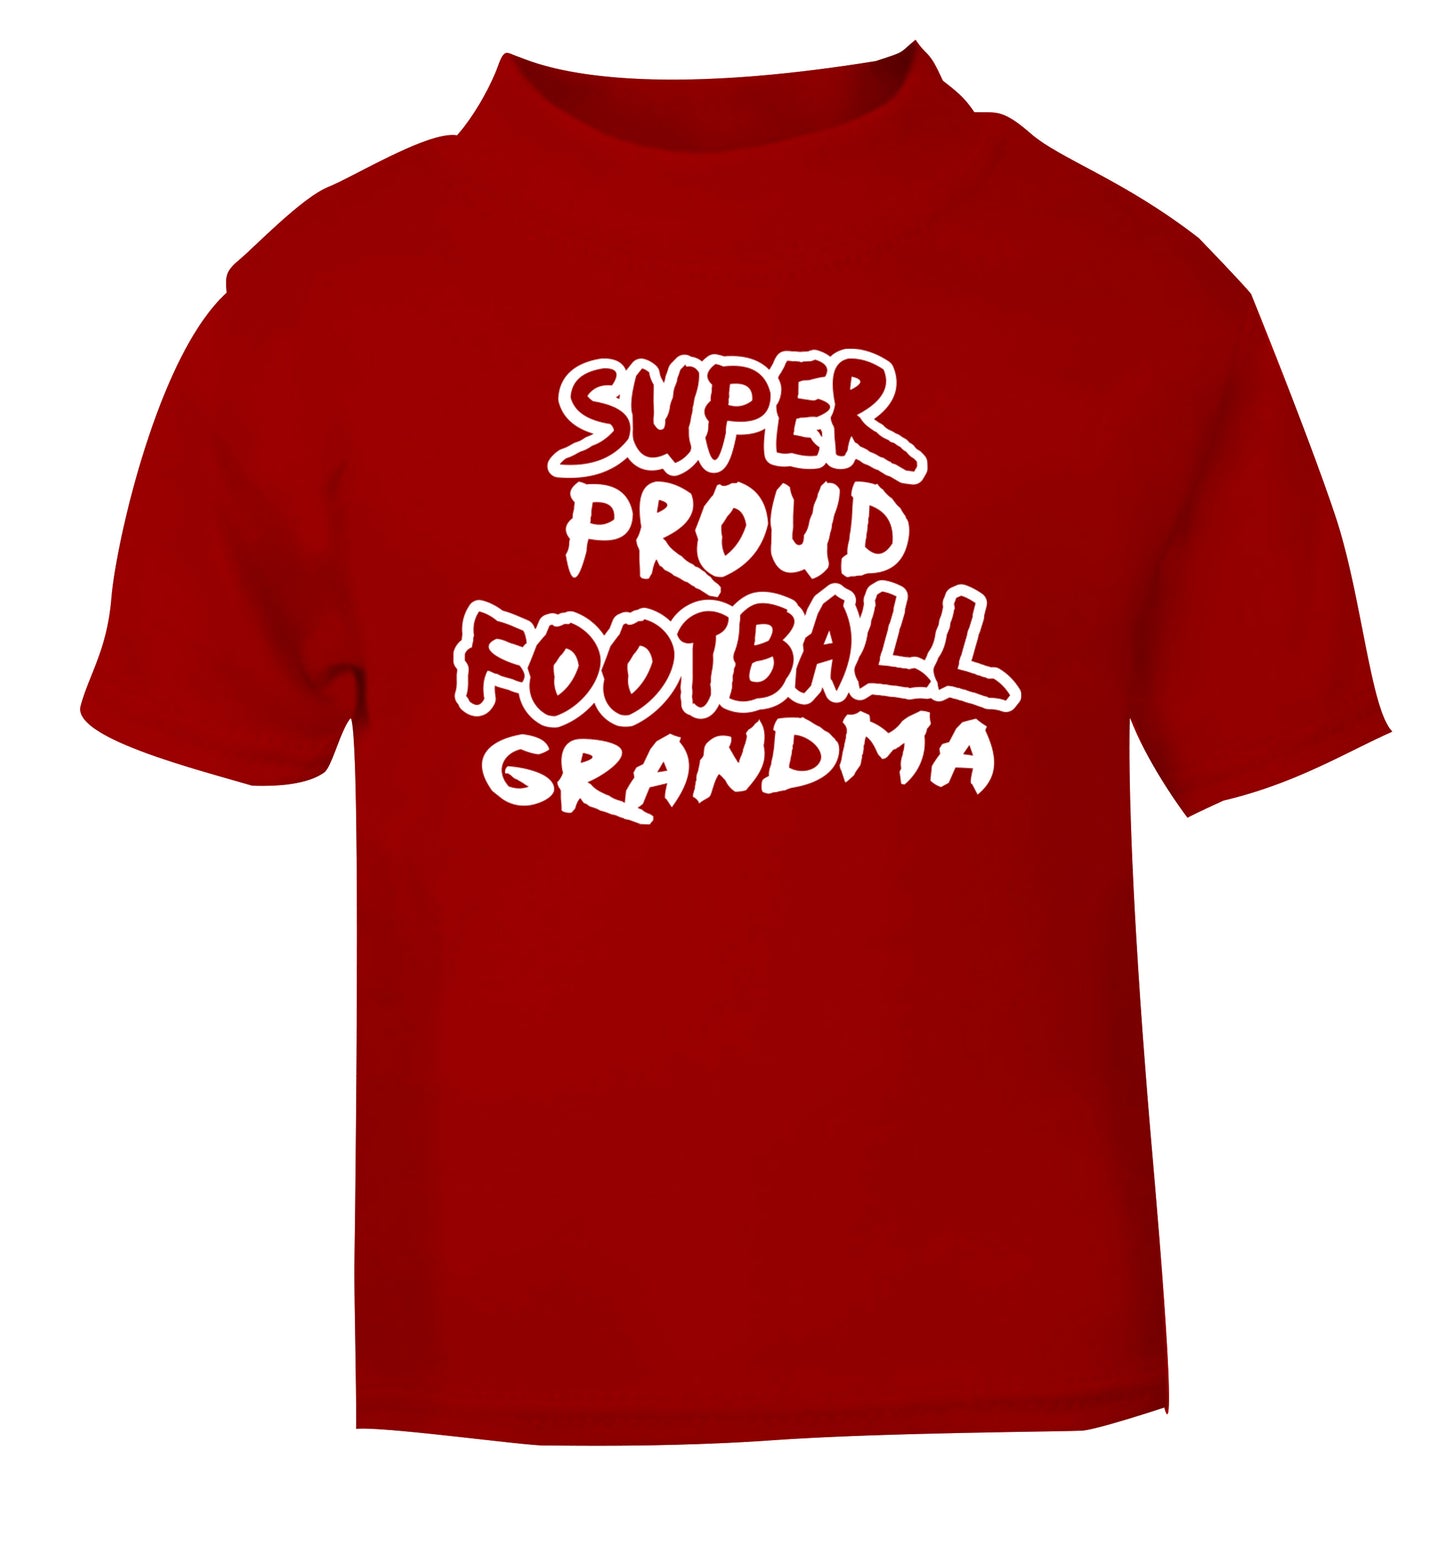 Super proud football grandma red Baby Toddler Tshirt 2 Years